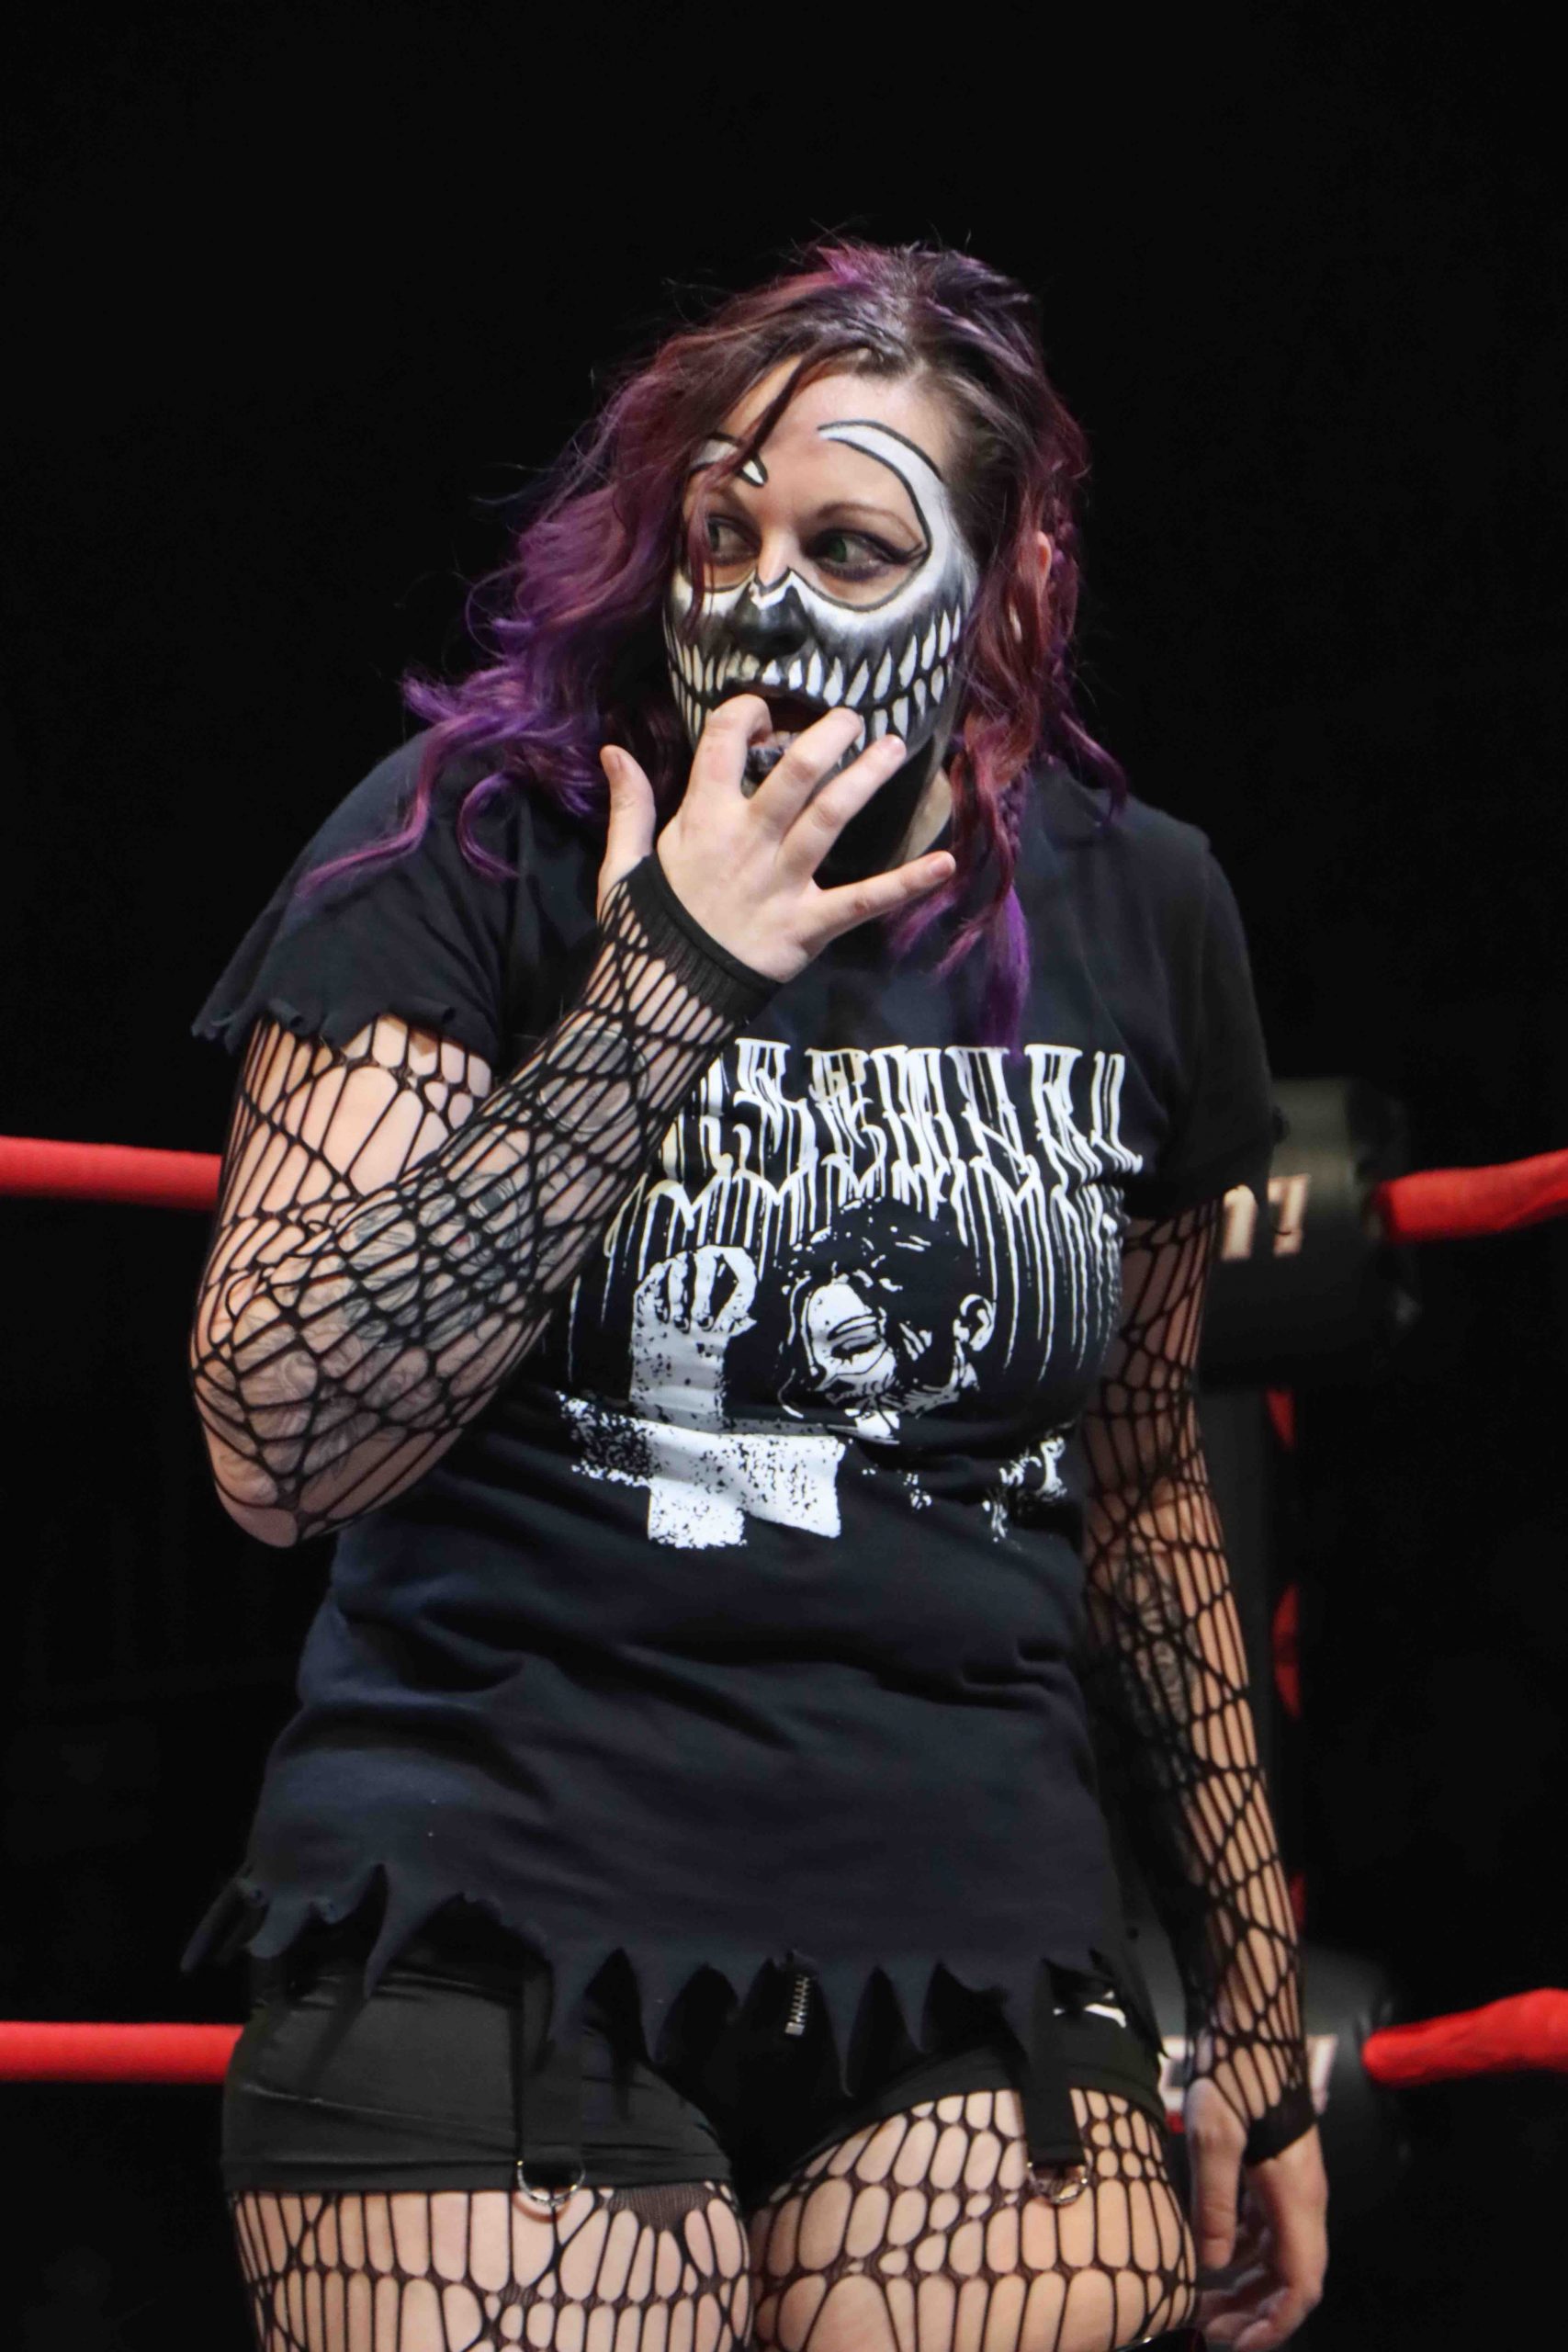 Gallery Susie Makes In Ring Debut Vs Rosemary Impact Wrestling 